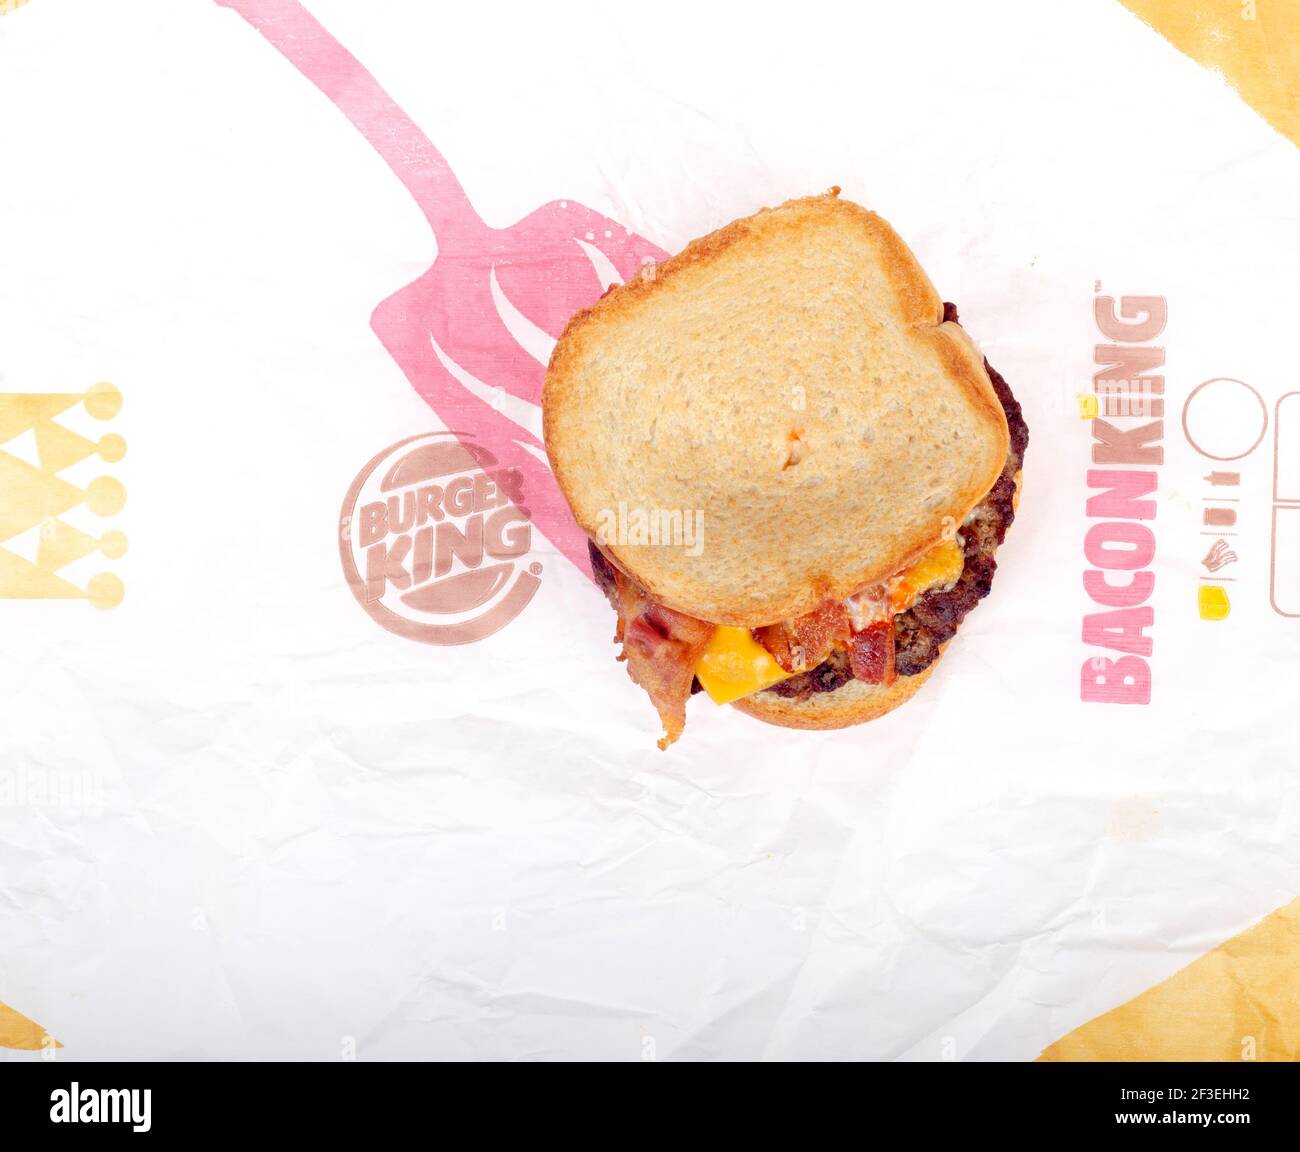 Burger King Bacon King Sourpaste Cheeseburger Sandwich on Wrapper Foto Stock